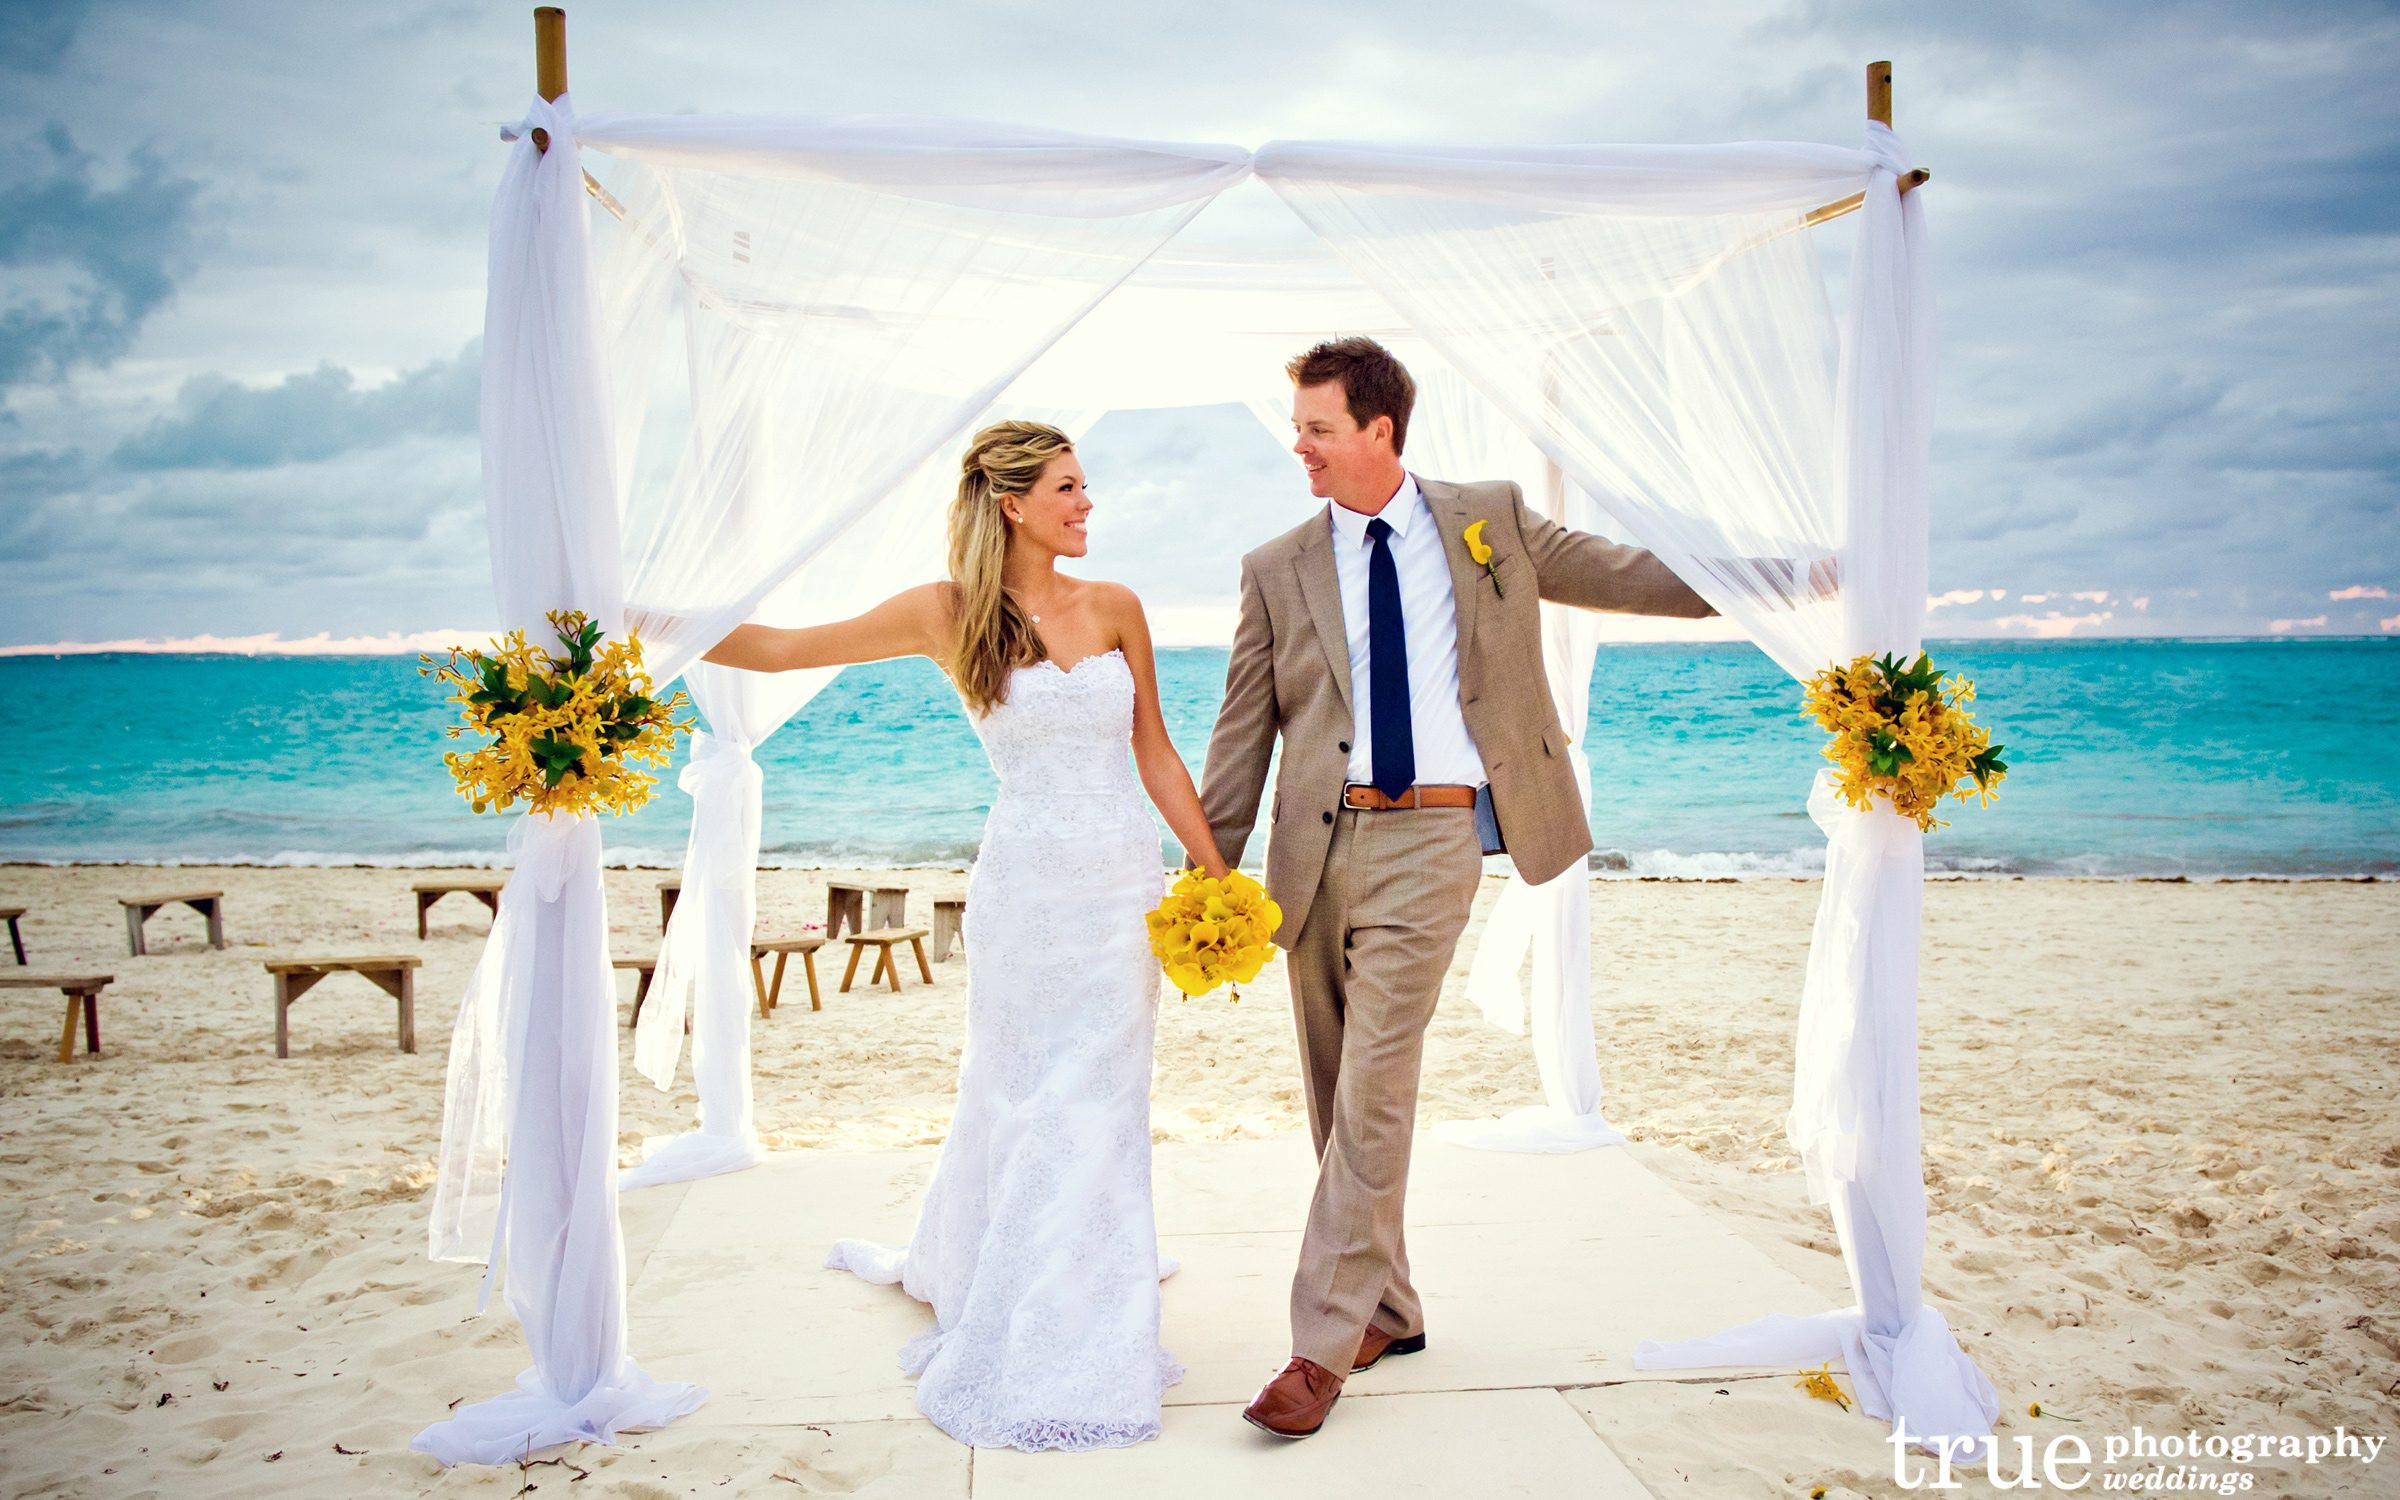 Best Beach Weddings
 12 Best Beach Wedding Destinations For Your D Day In 2018